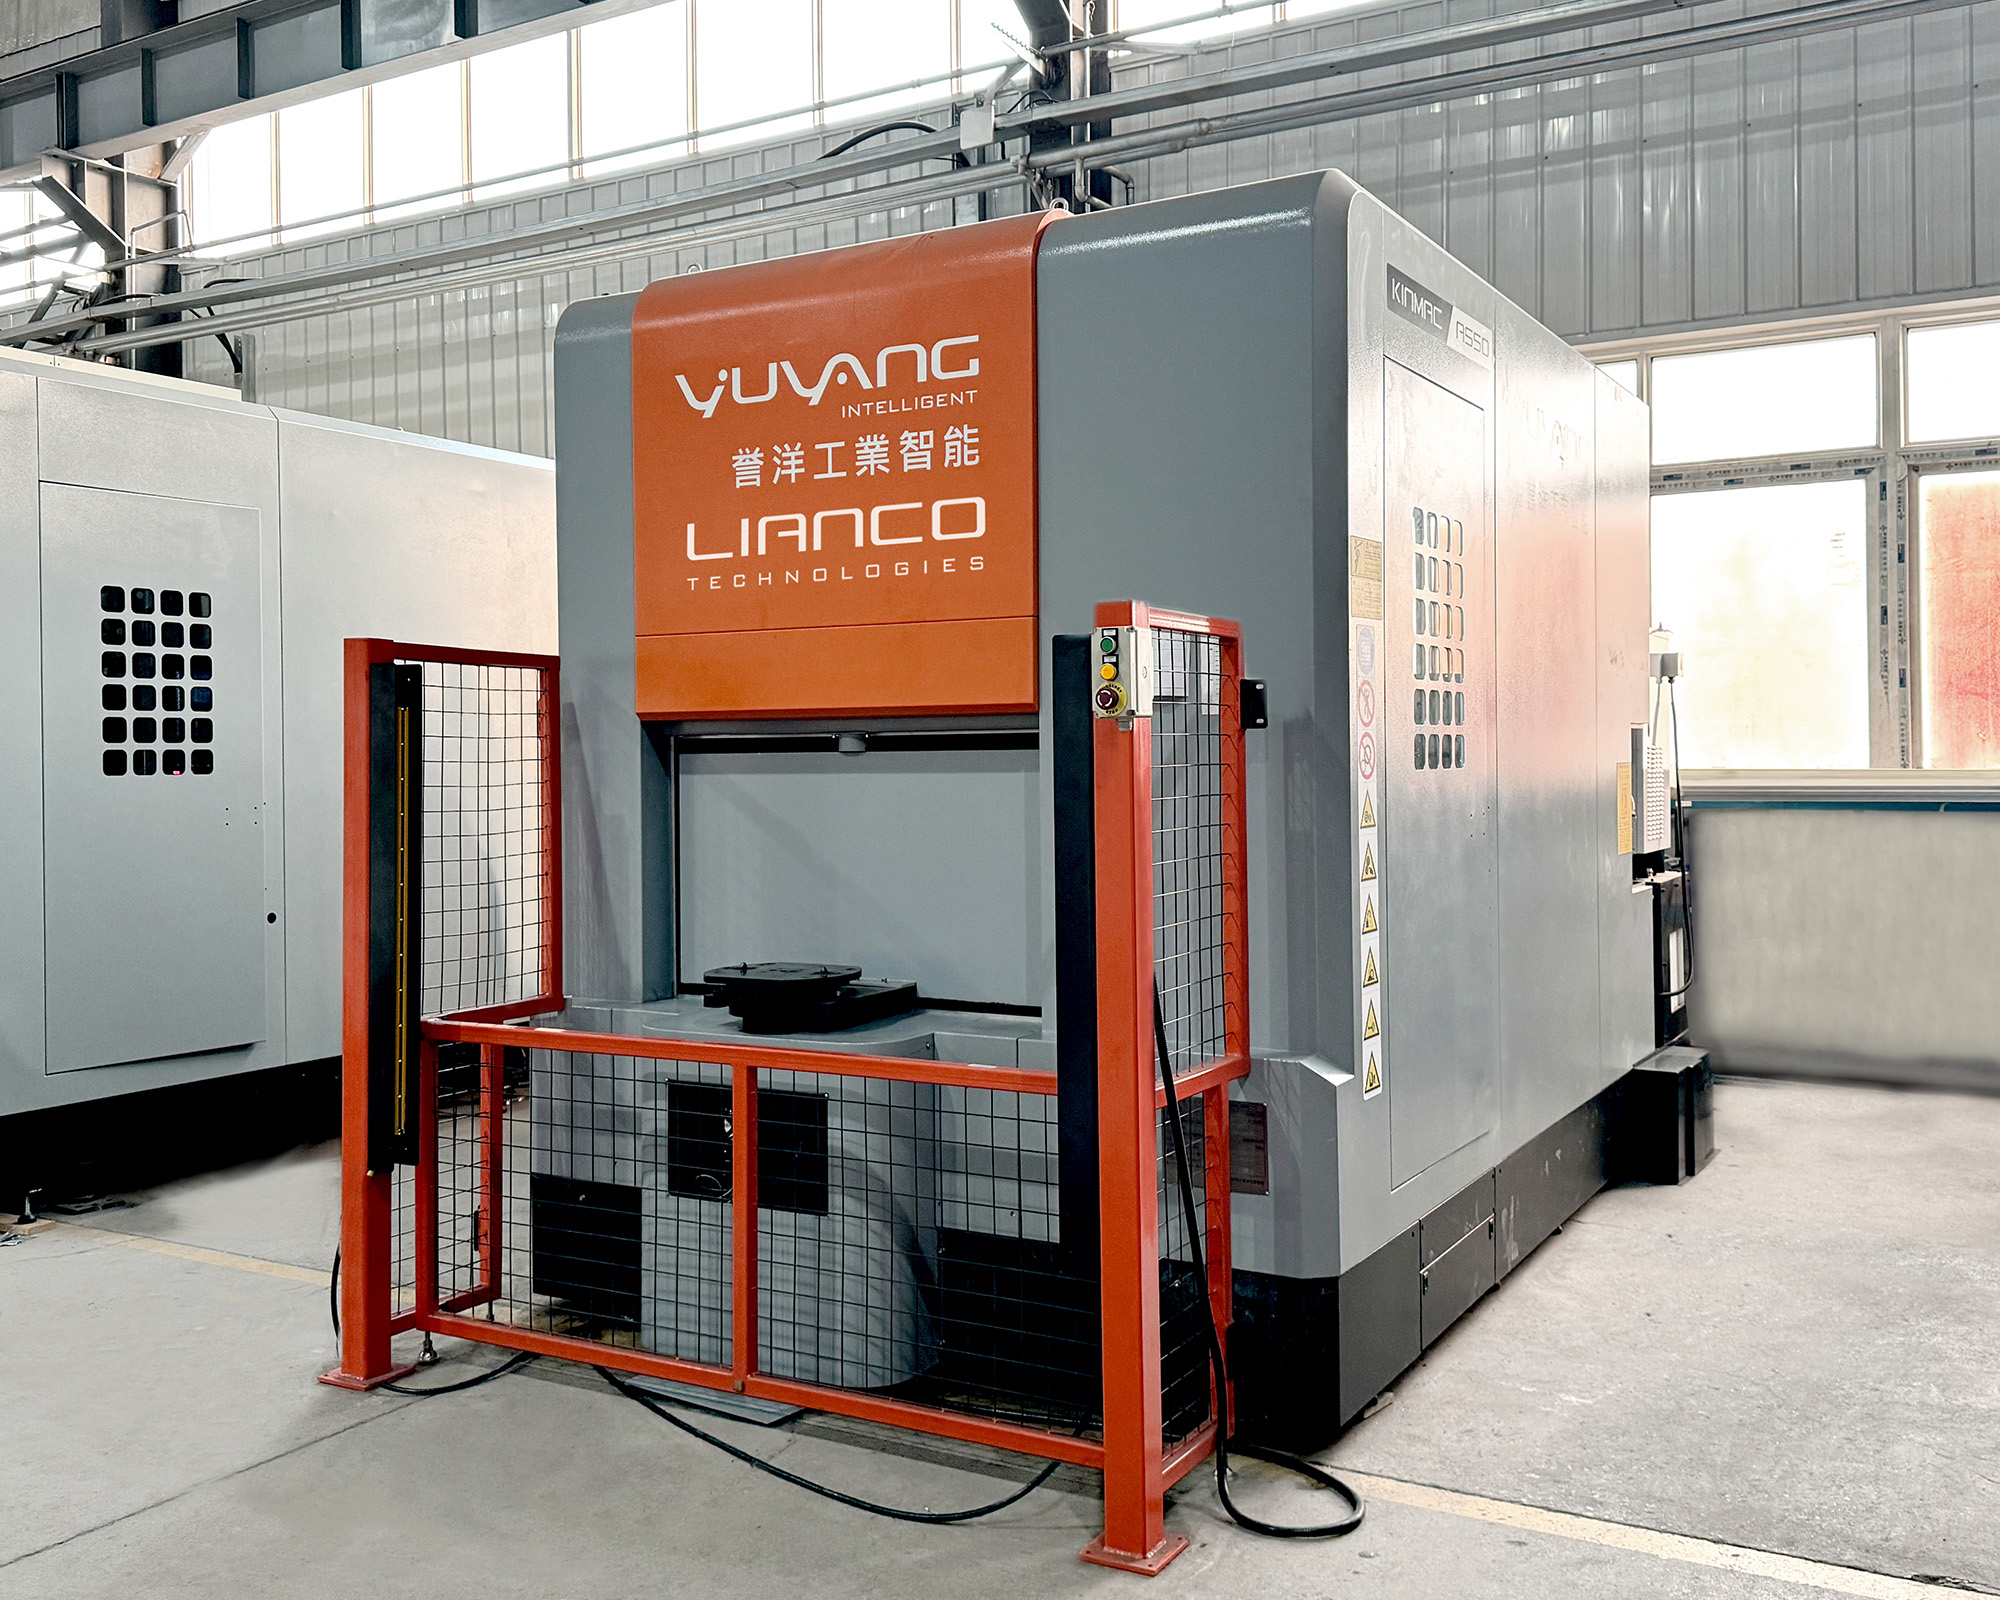 AS50 machine - Lianco Technologies